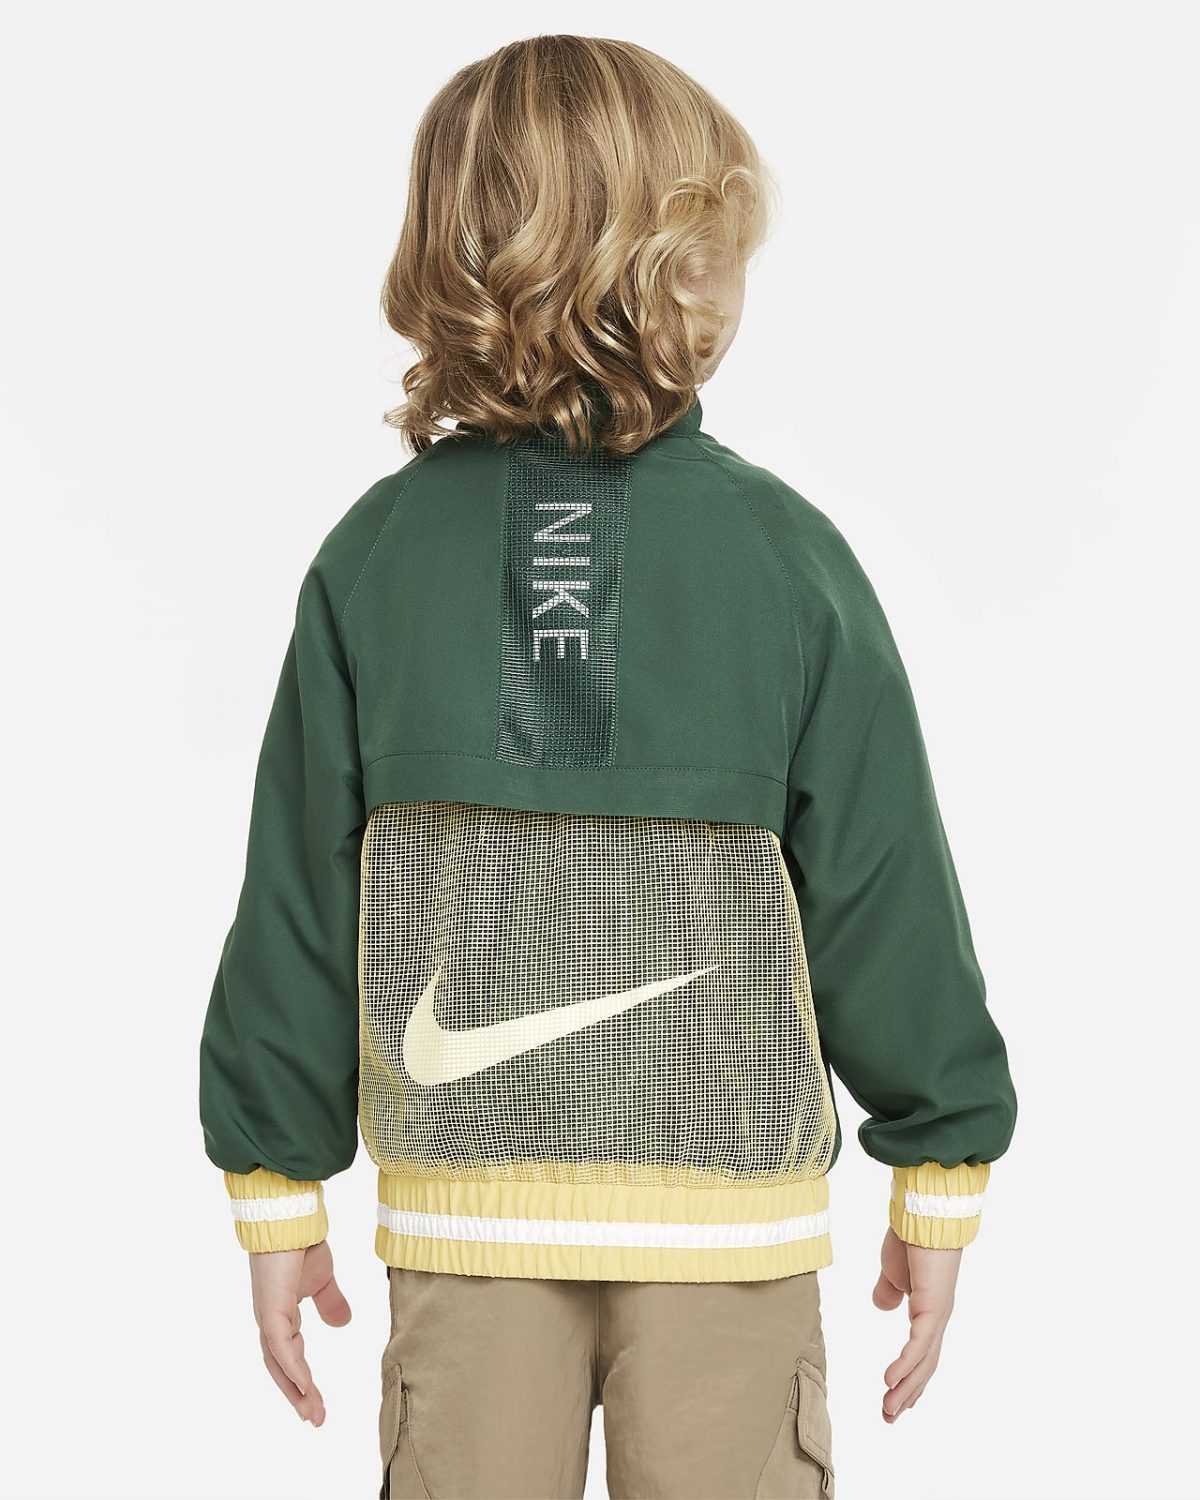 Детский топ Nike Crossover фотография